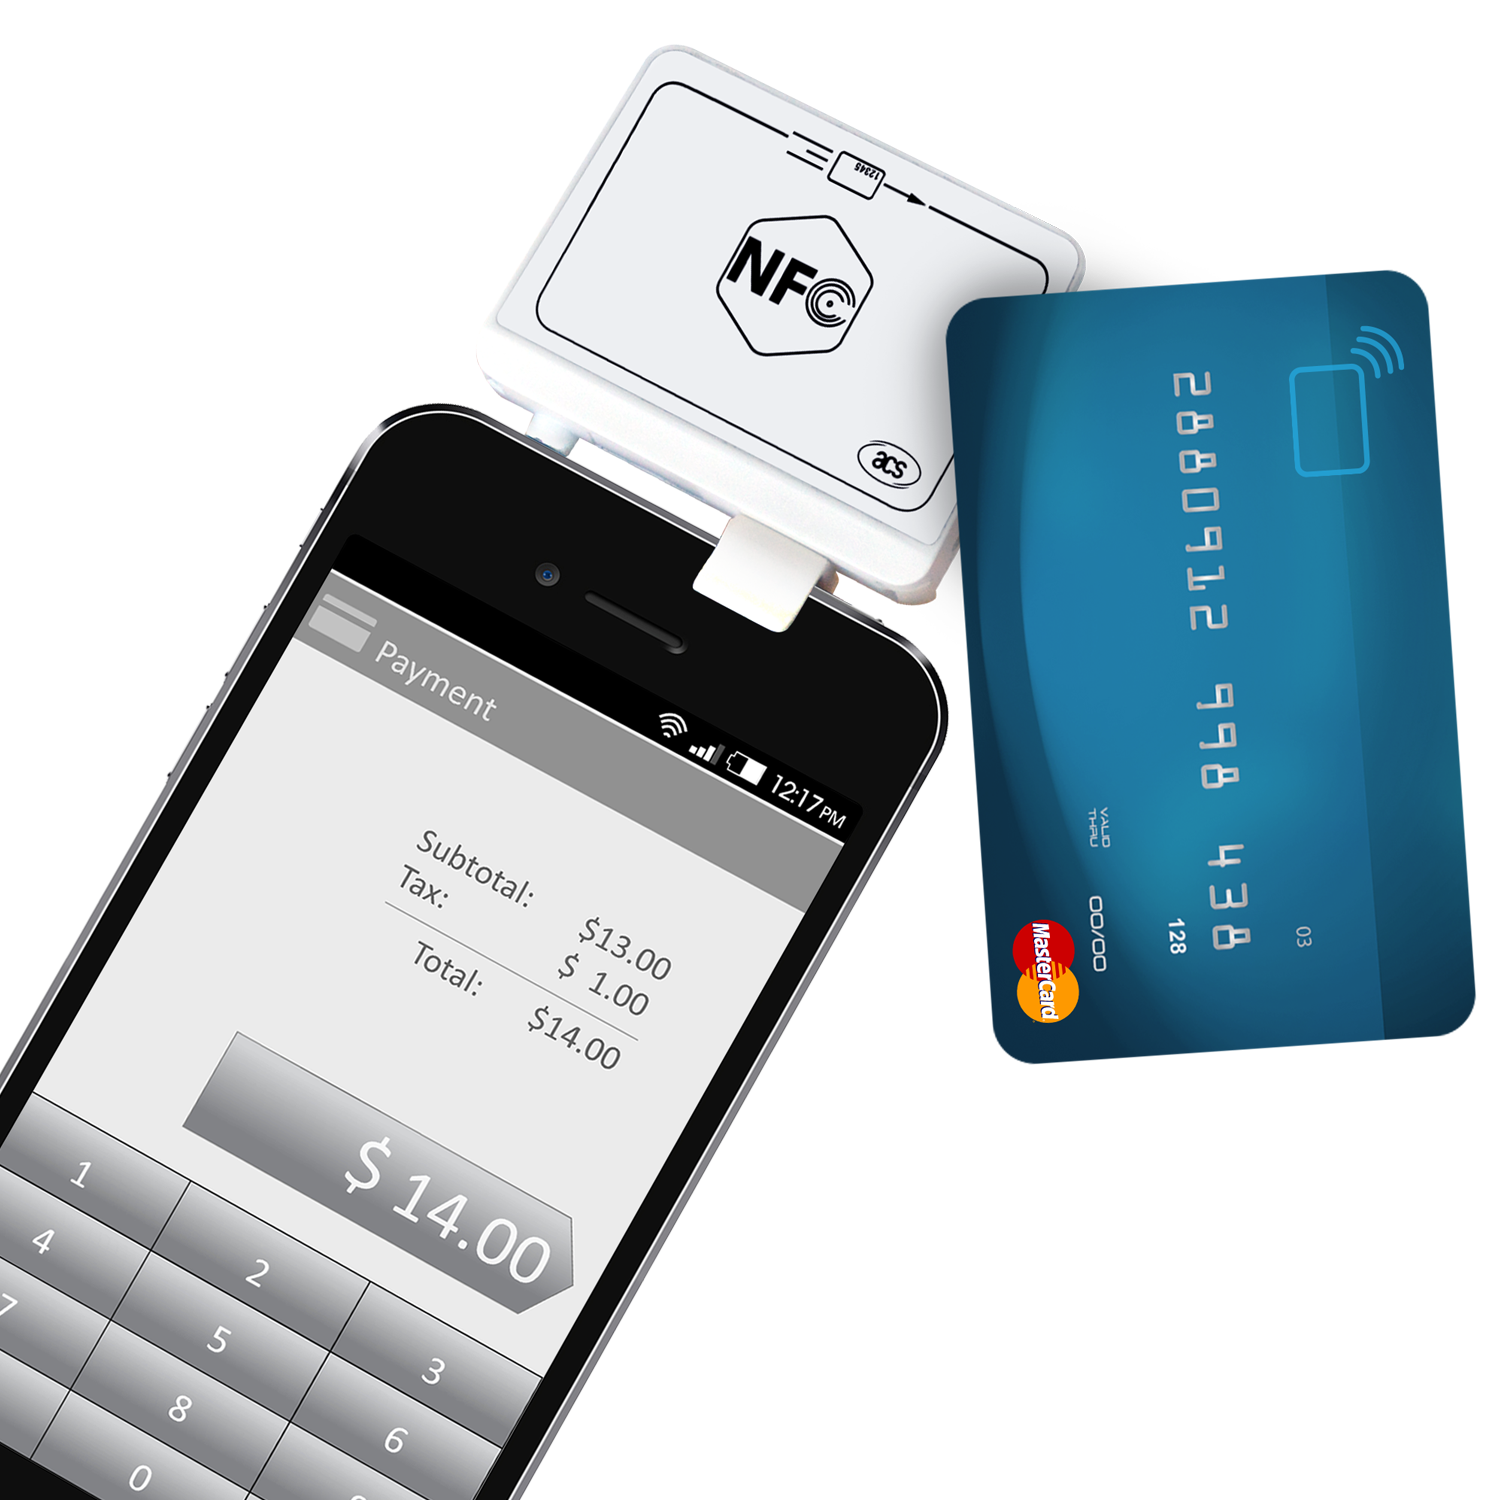 ACR35 NFC Android iOS Smart Card Reader - MoTechno